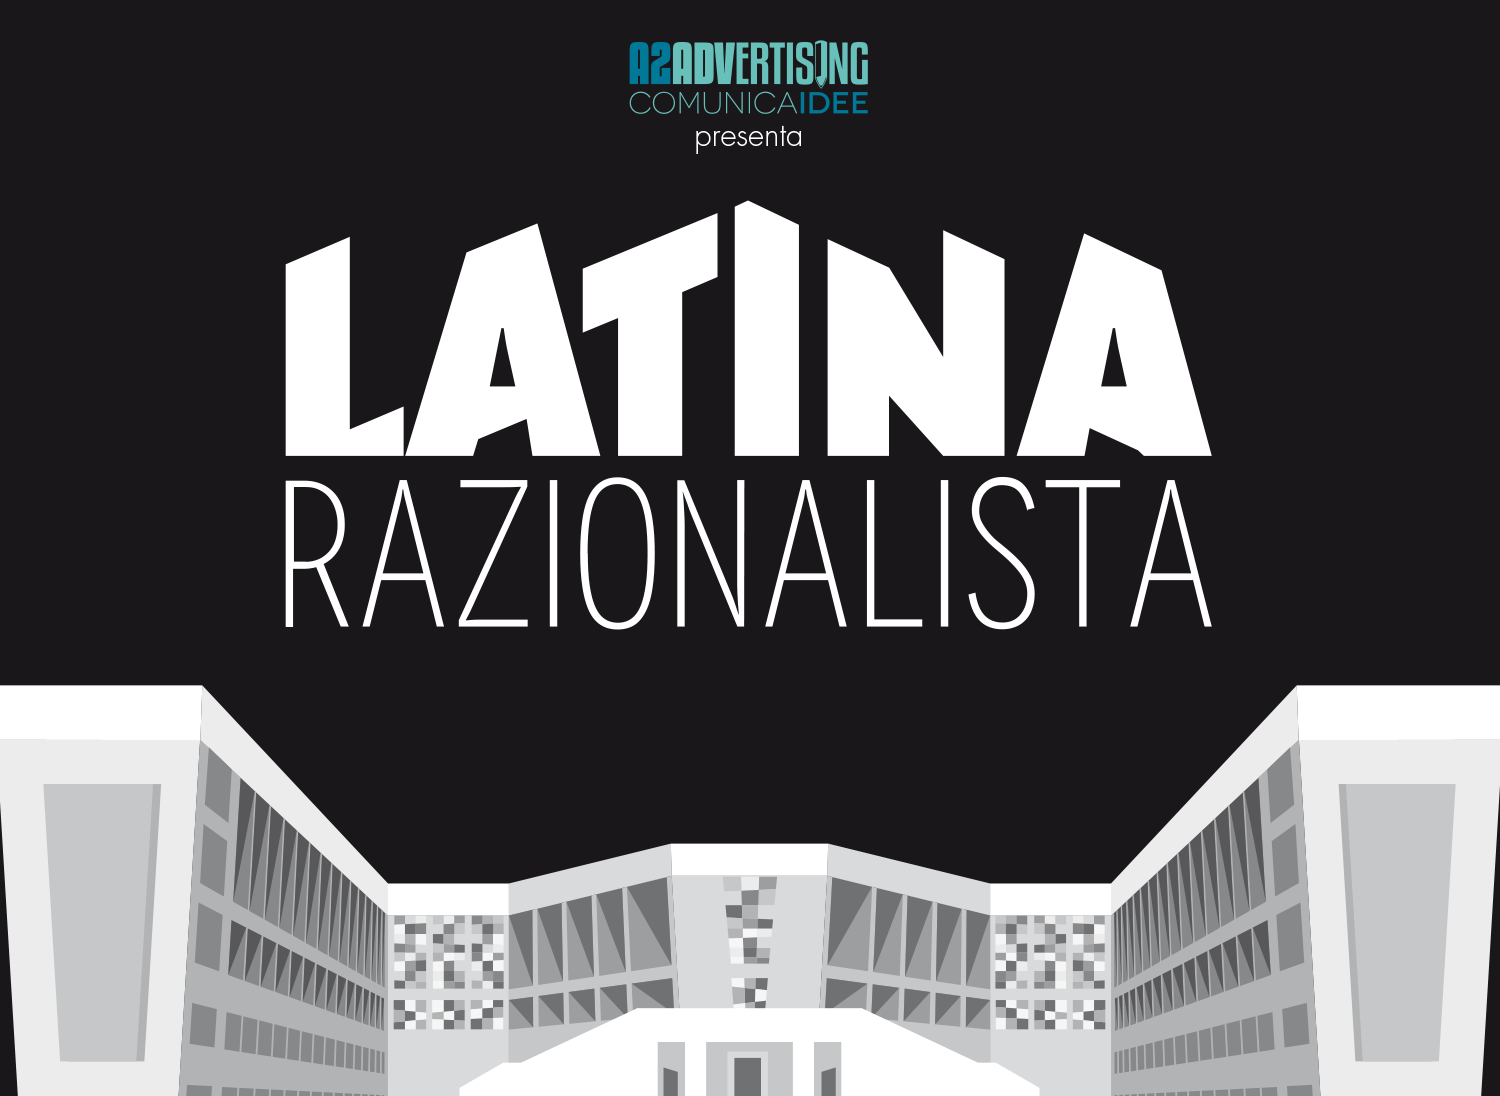 Latina-Razionalista-A2-Advertising